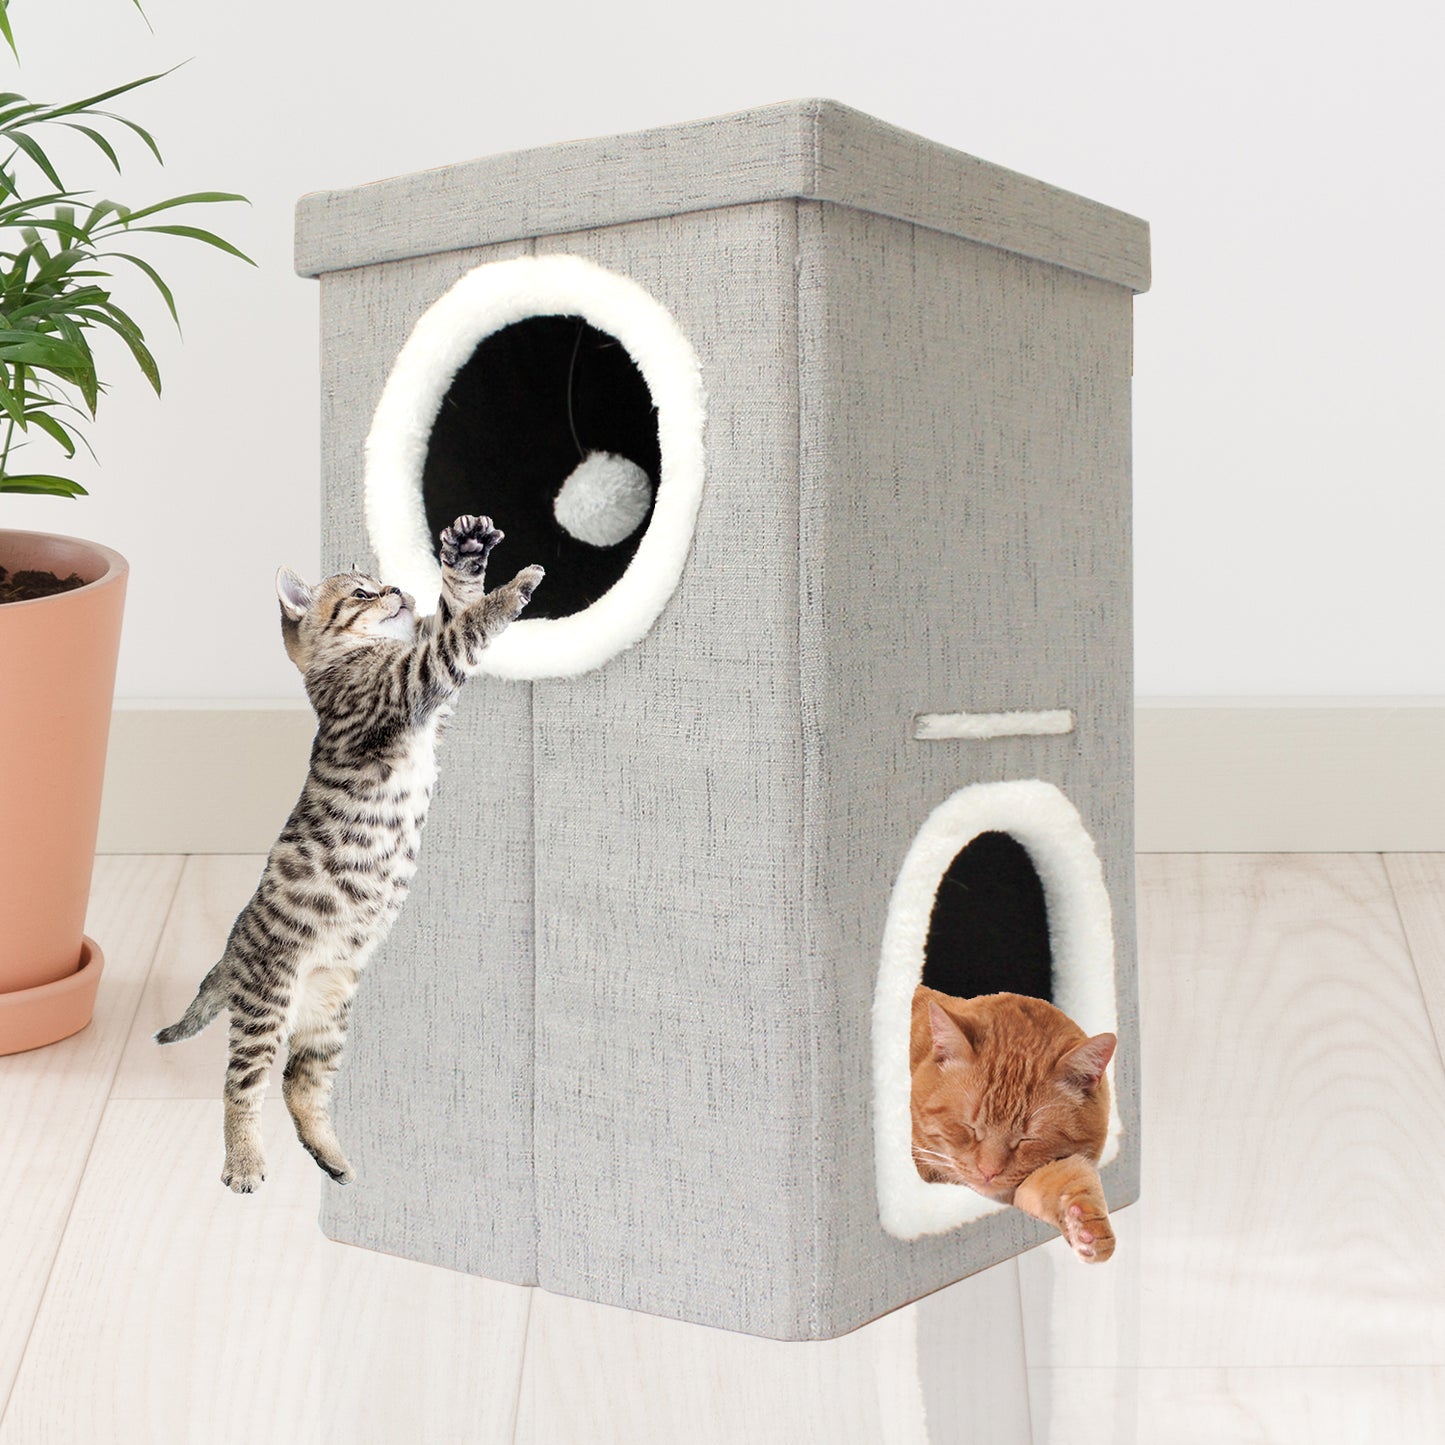 Collapsible 2-Level Plush Kitty Cube House, Stylish Cat Condo